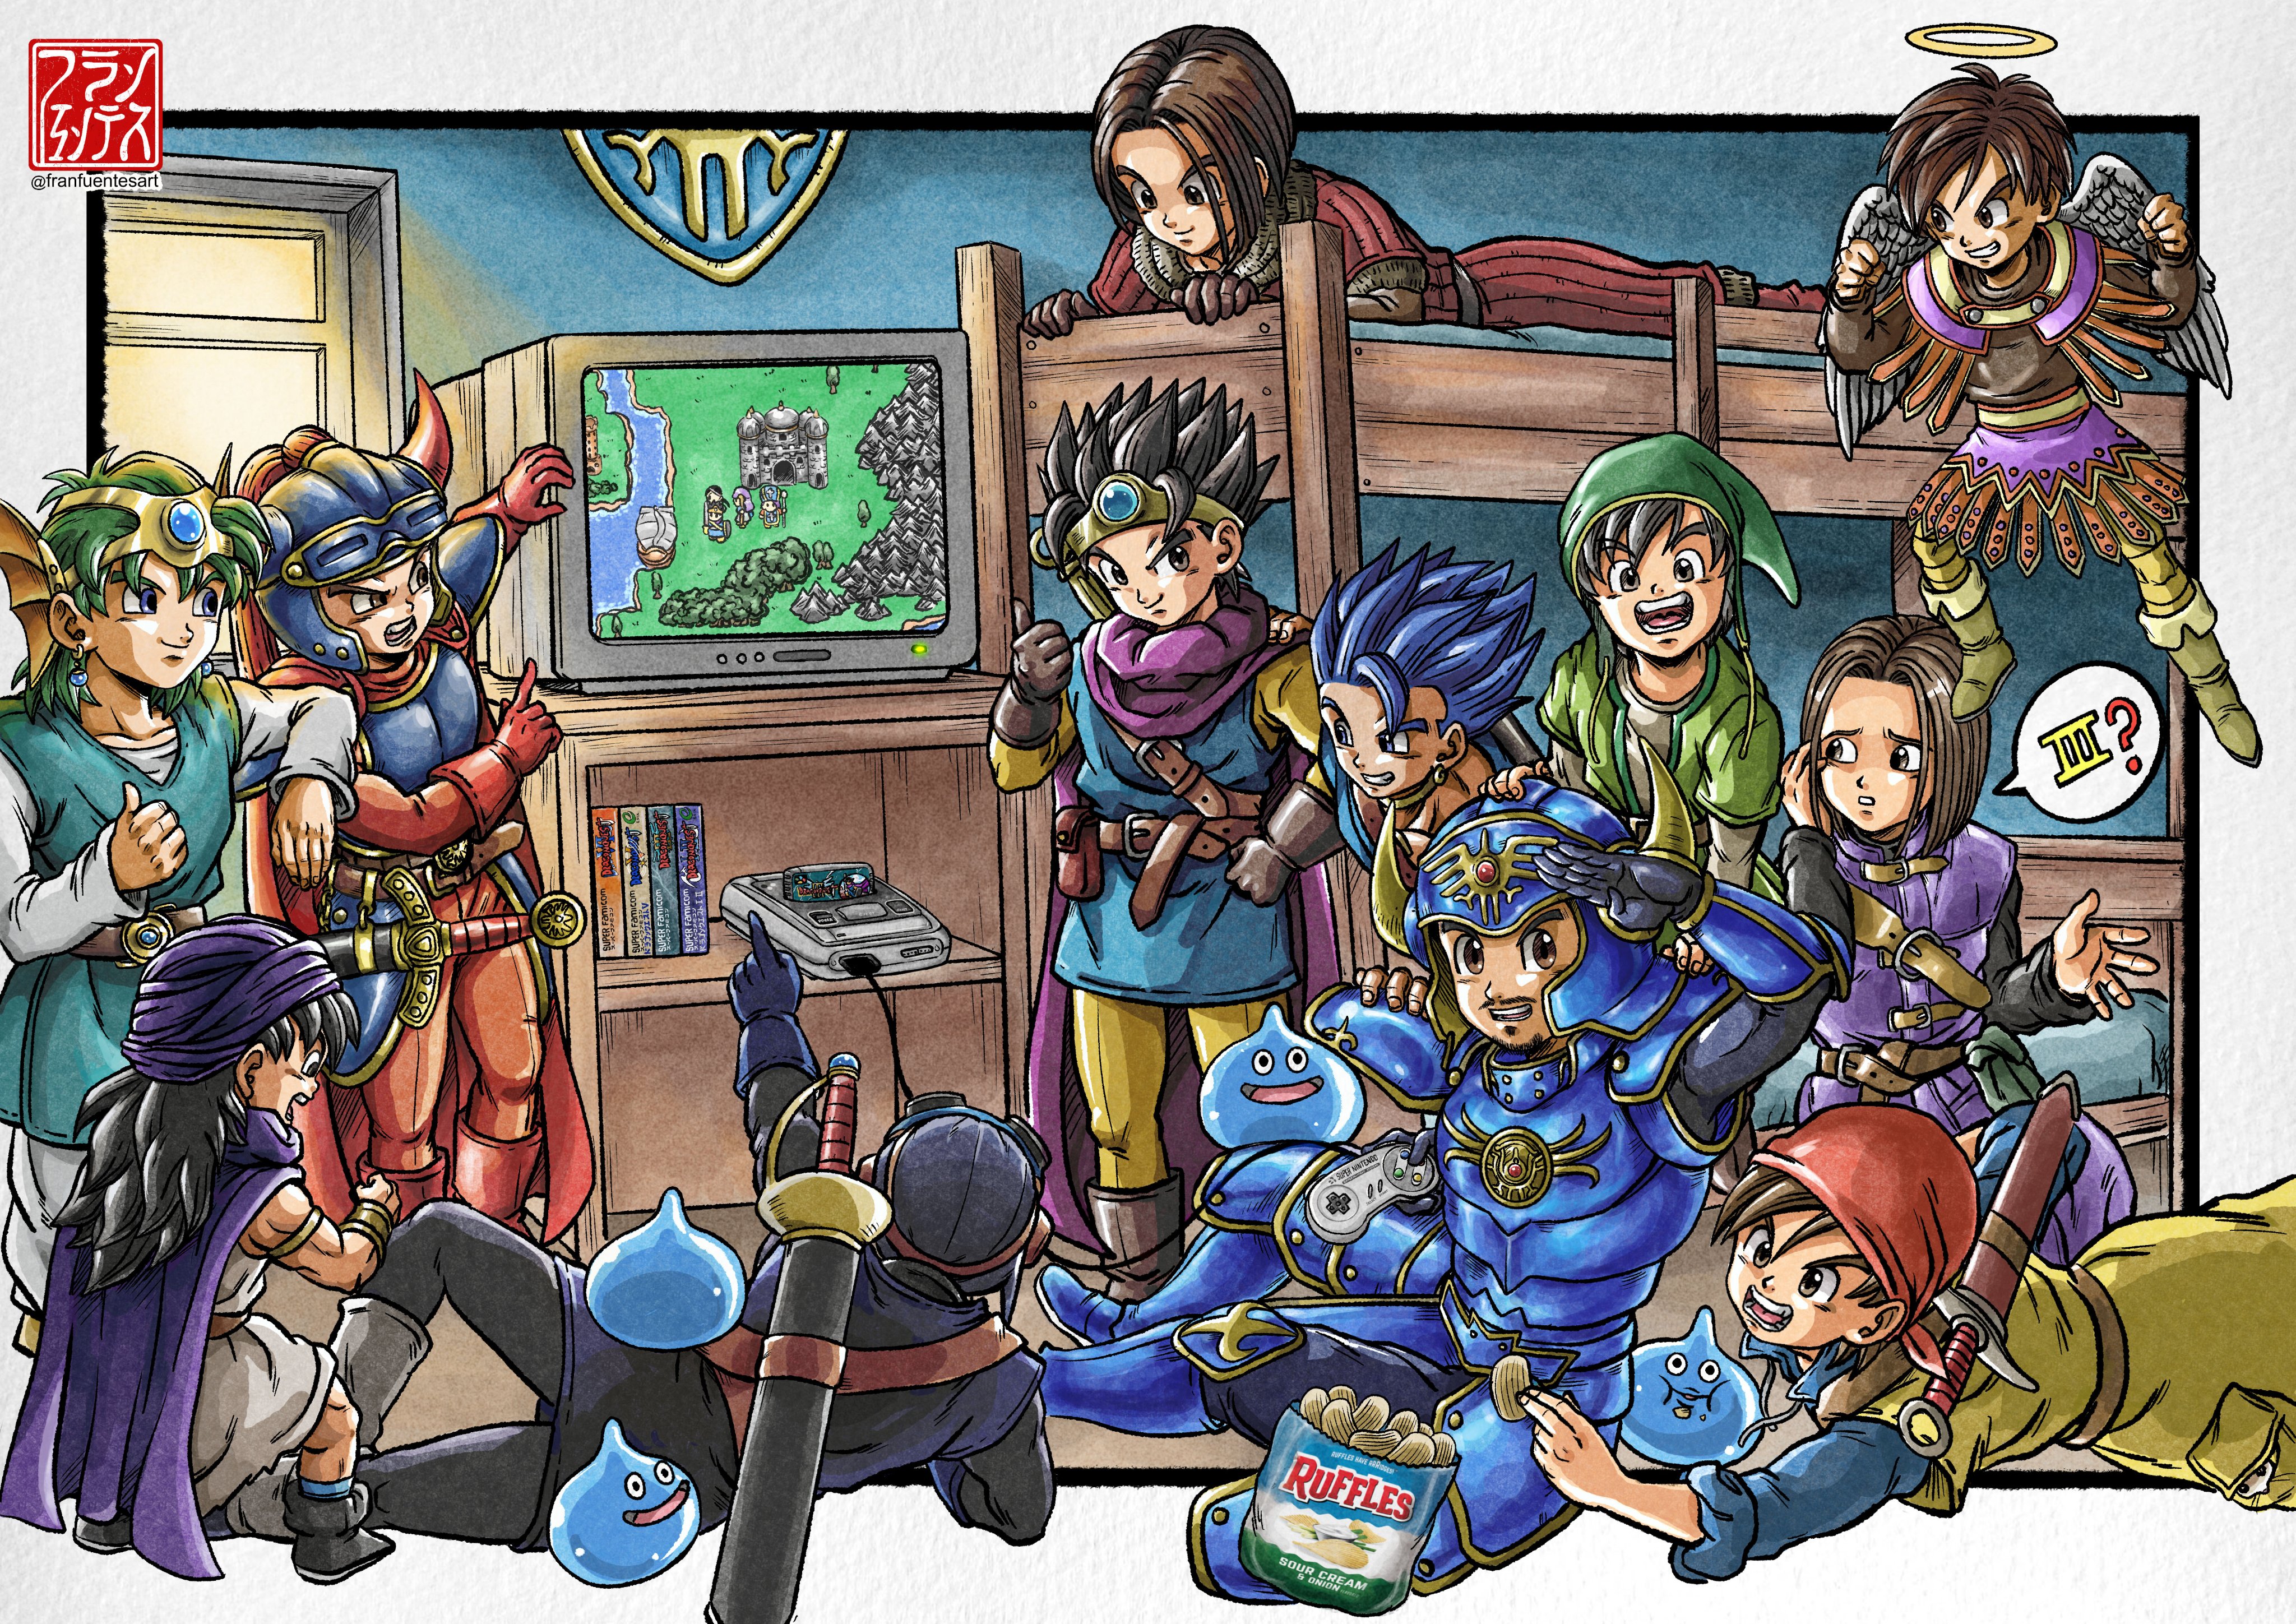 Dragon Quest tribute Art Board Print by FranFuentesArt